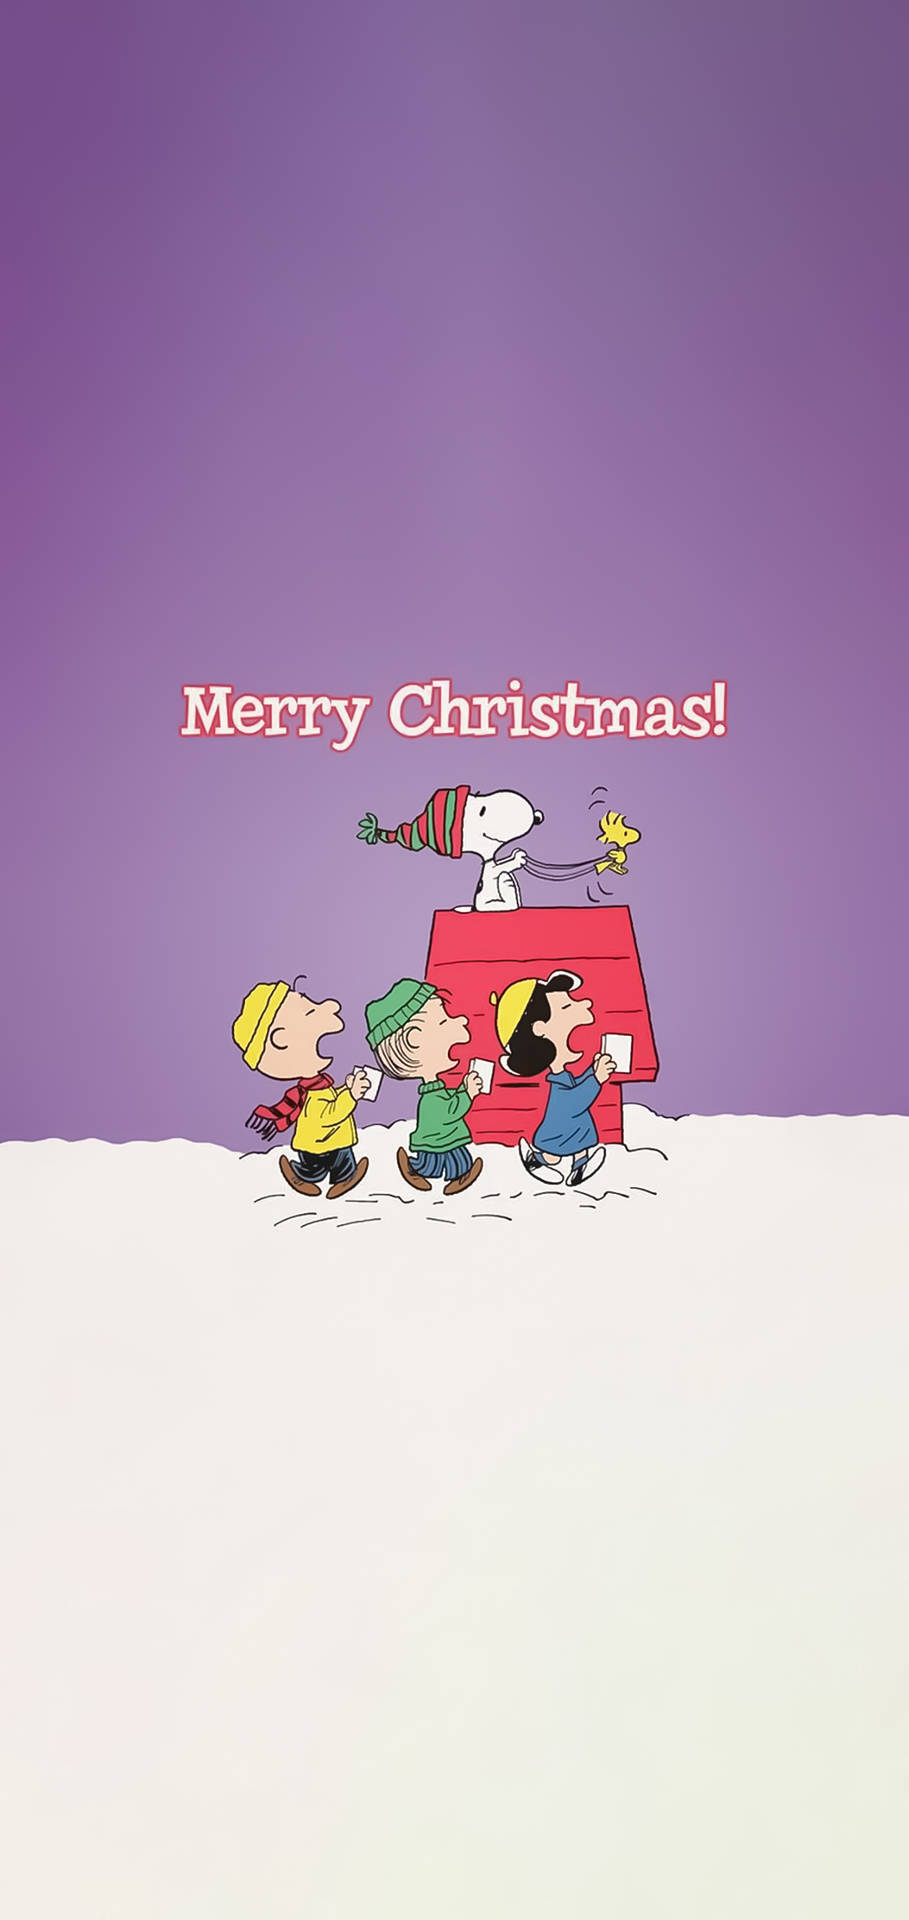 Njutav En Festlig Jul Med Snoopy Som Din Dators Eller Mobils Bakgrundsbild! Wallpaper